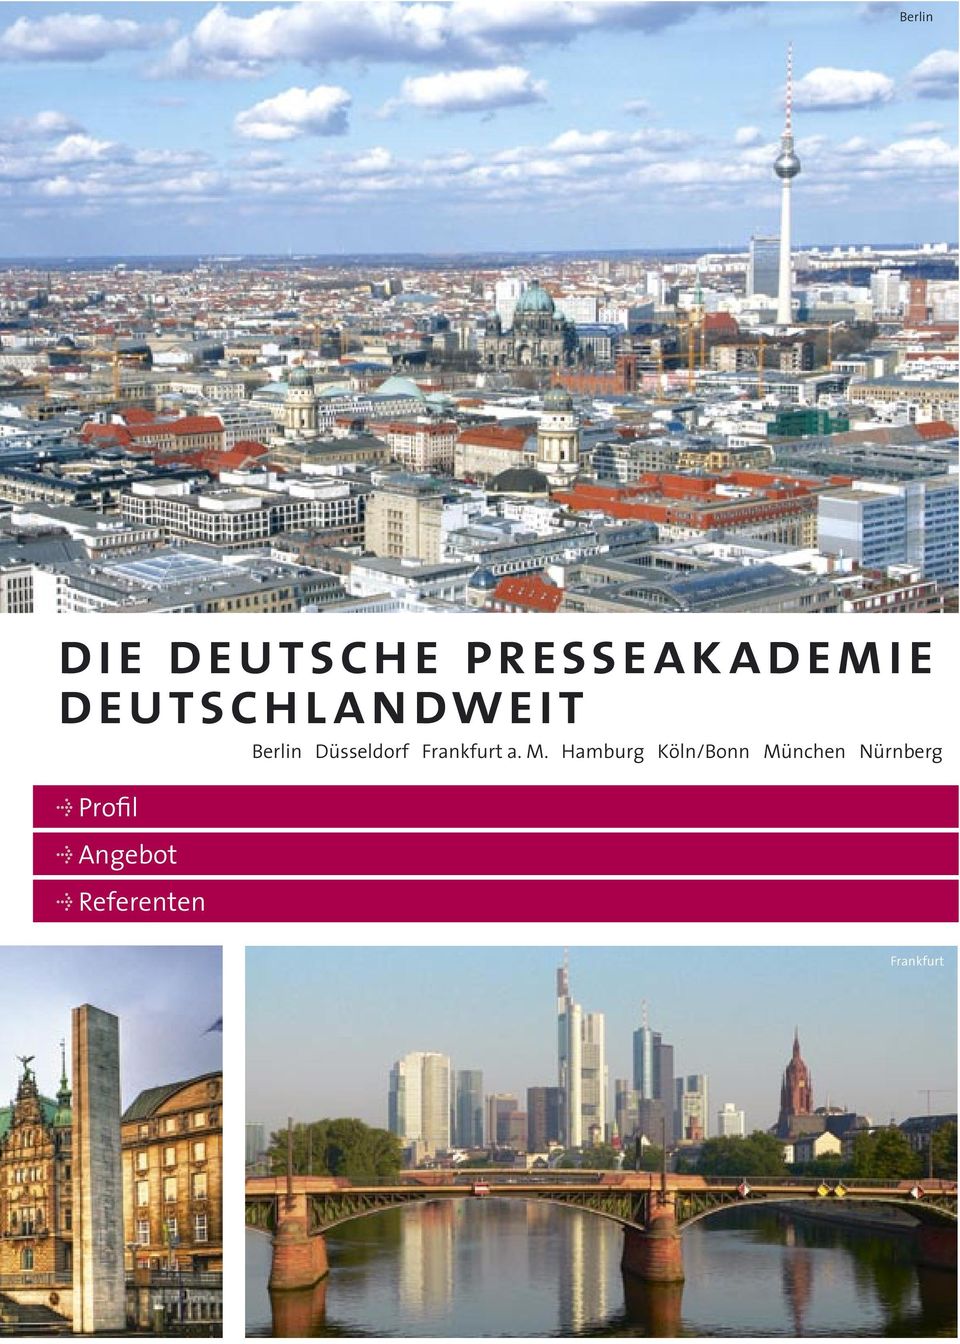 Referenten Berlin Düsseldorf Frankfurt